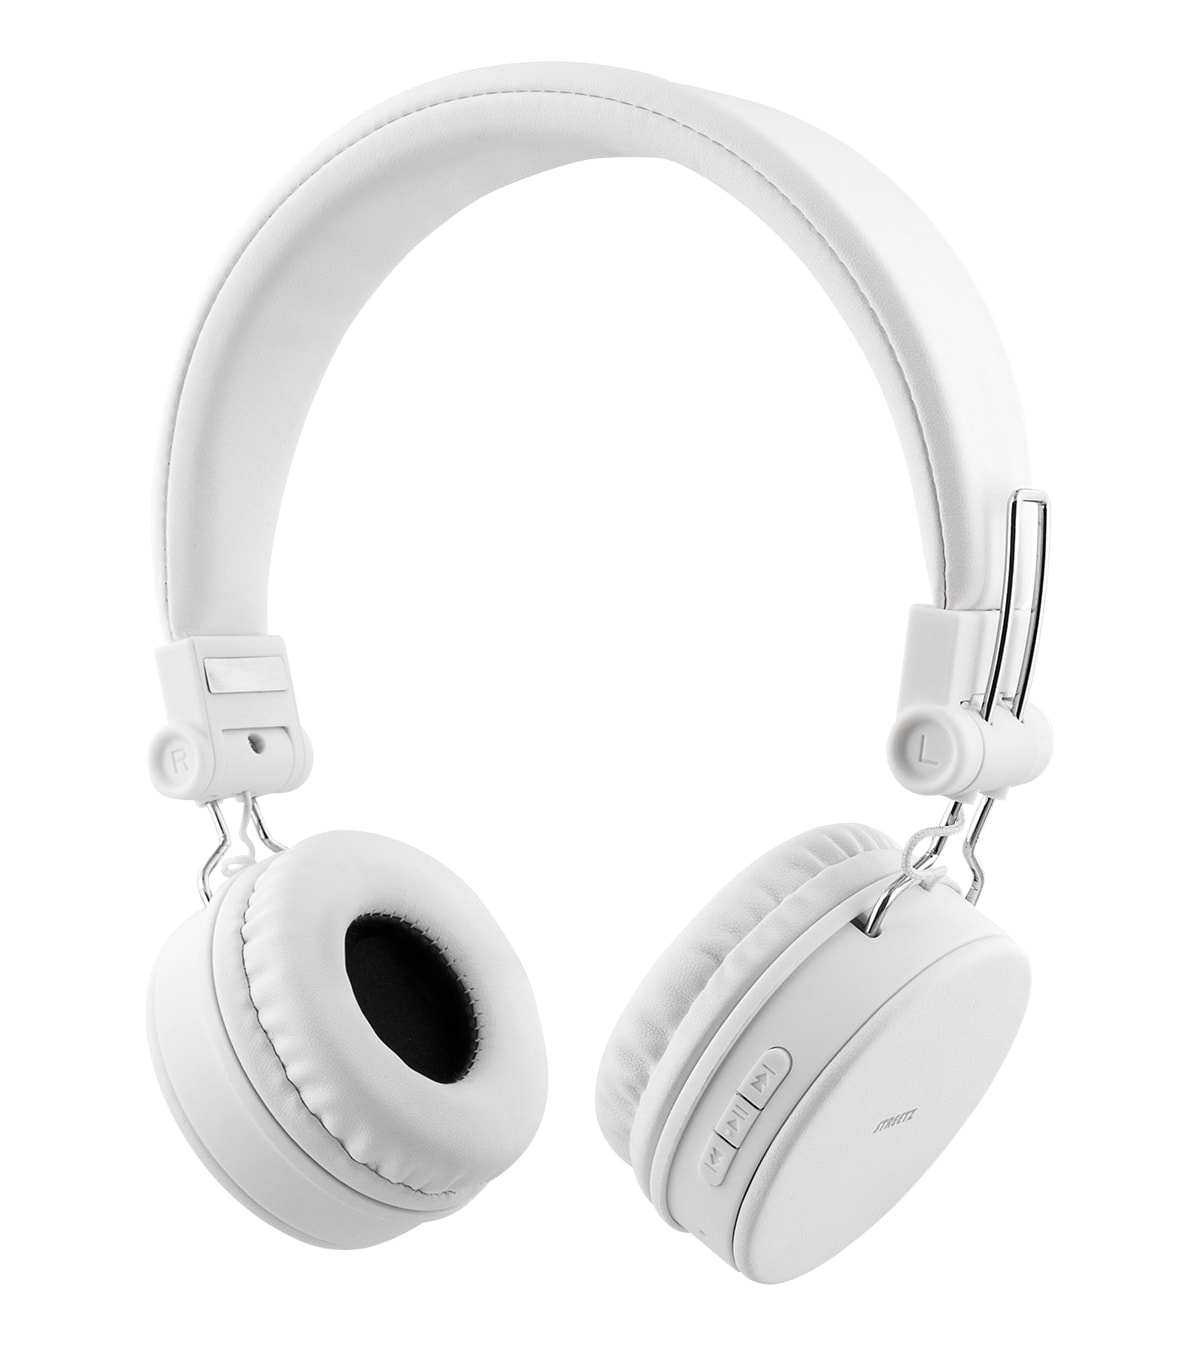 STREETZ Bluetooth On-Ear Kopfhörer HL-BT403, faltbar, weiß